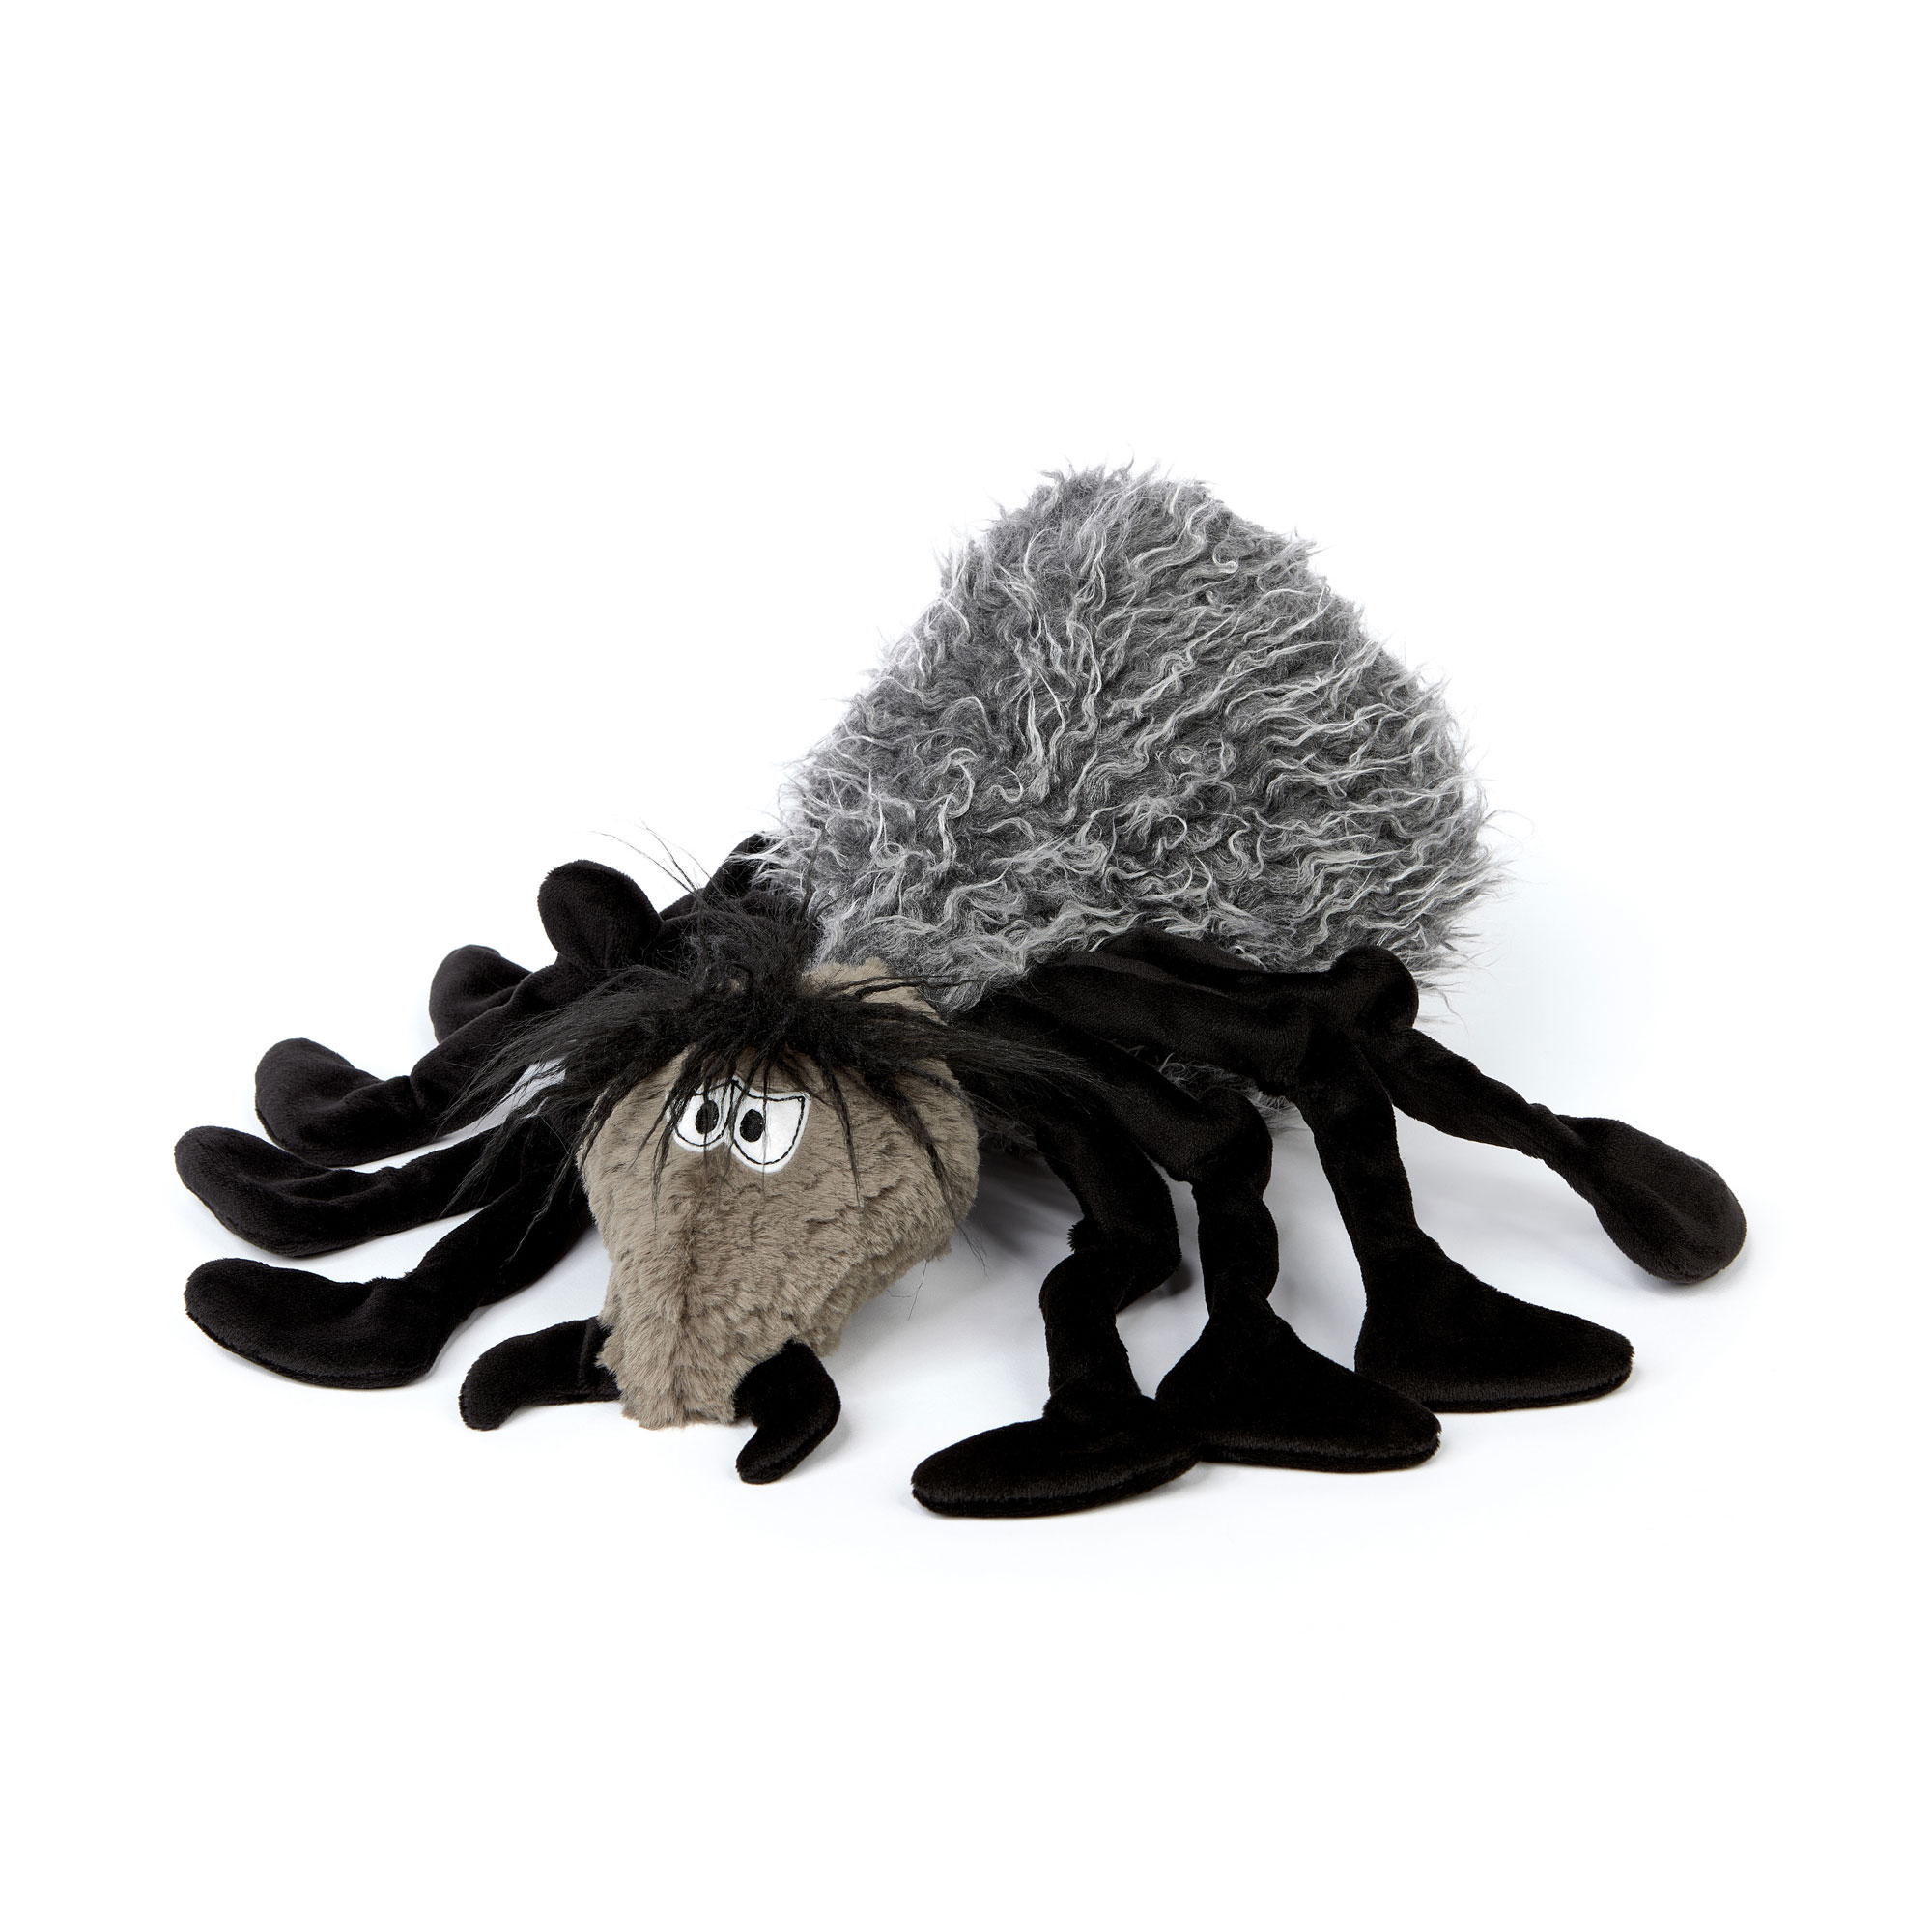 Large cuddle plush toy spider Brigitt Igitt, Beasts